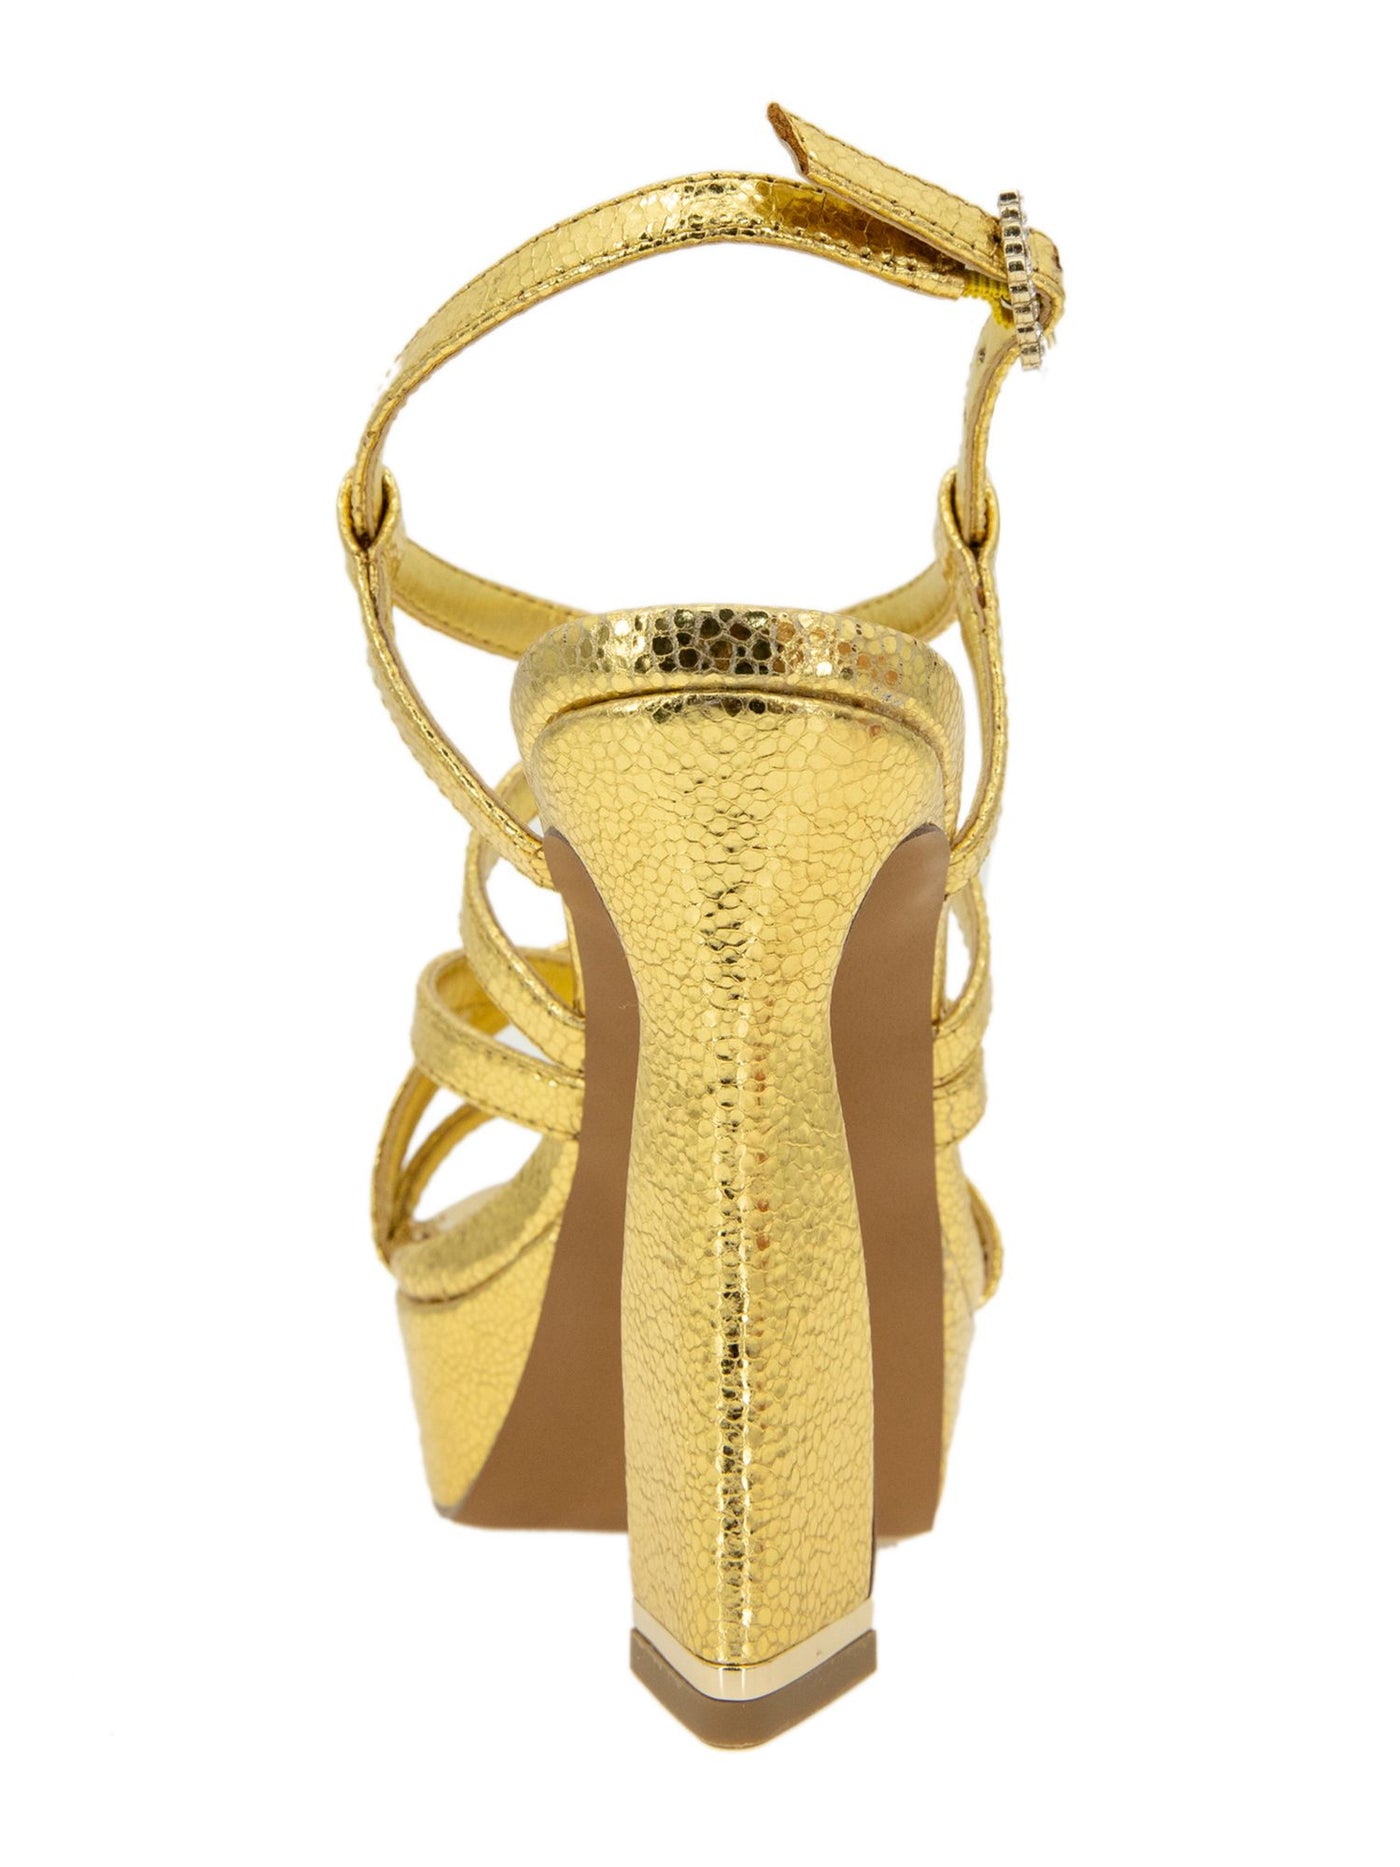 KENNETH COLE NEW YORK Womens Gold 1'' Platform Padded Metallic Strappy Allen Almond Toe Sculpted Heel Buckle Heeled Sandal 9.5